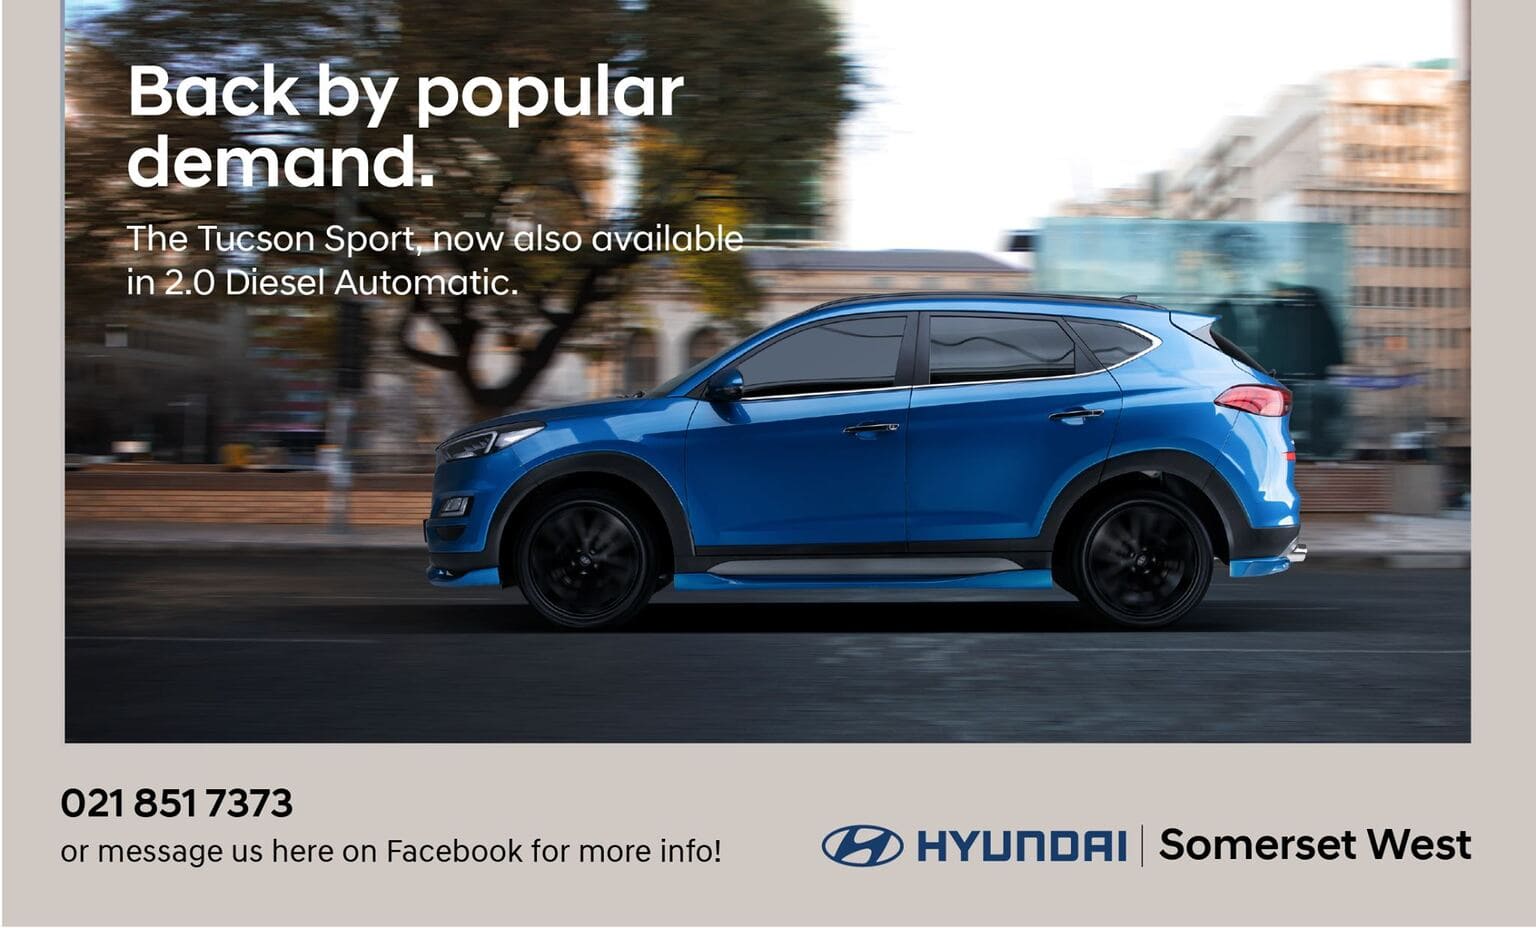 Custom Facebook post example from Hyundai Somerset West